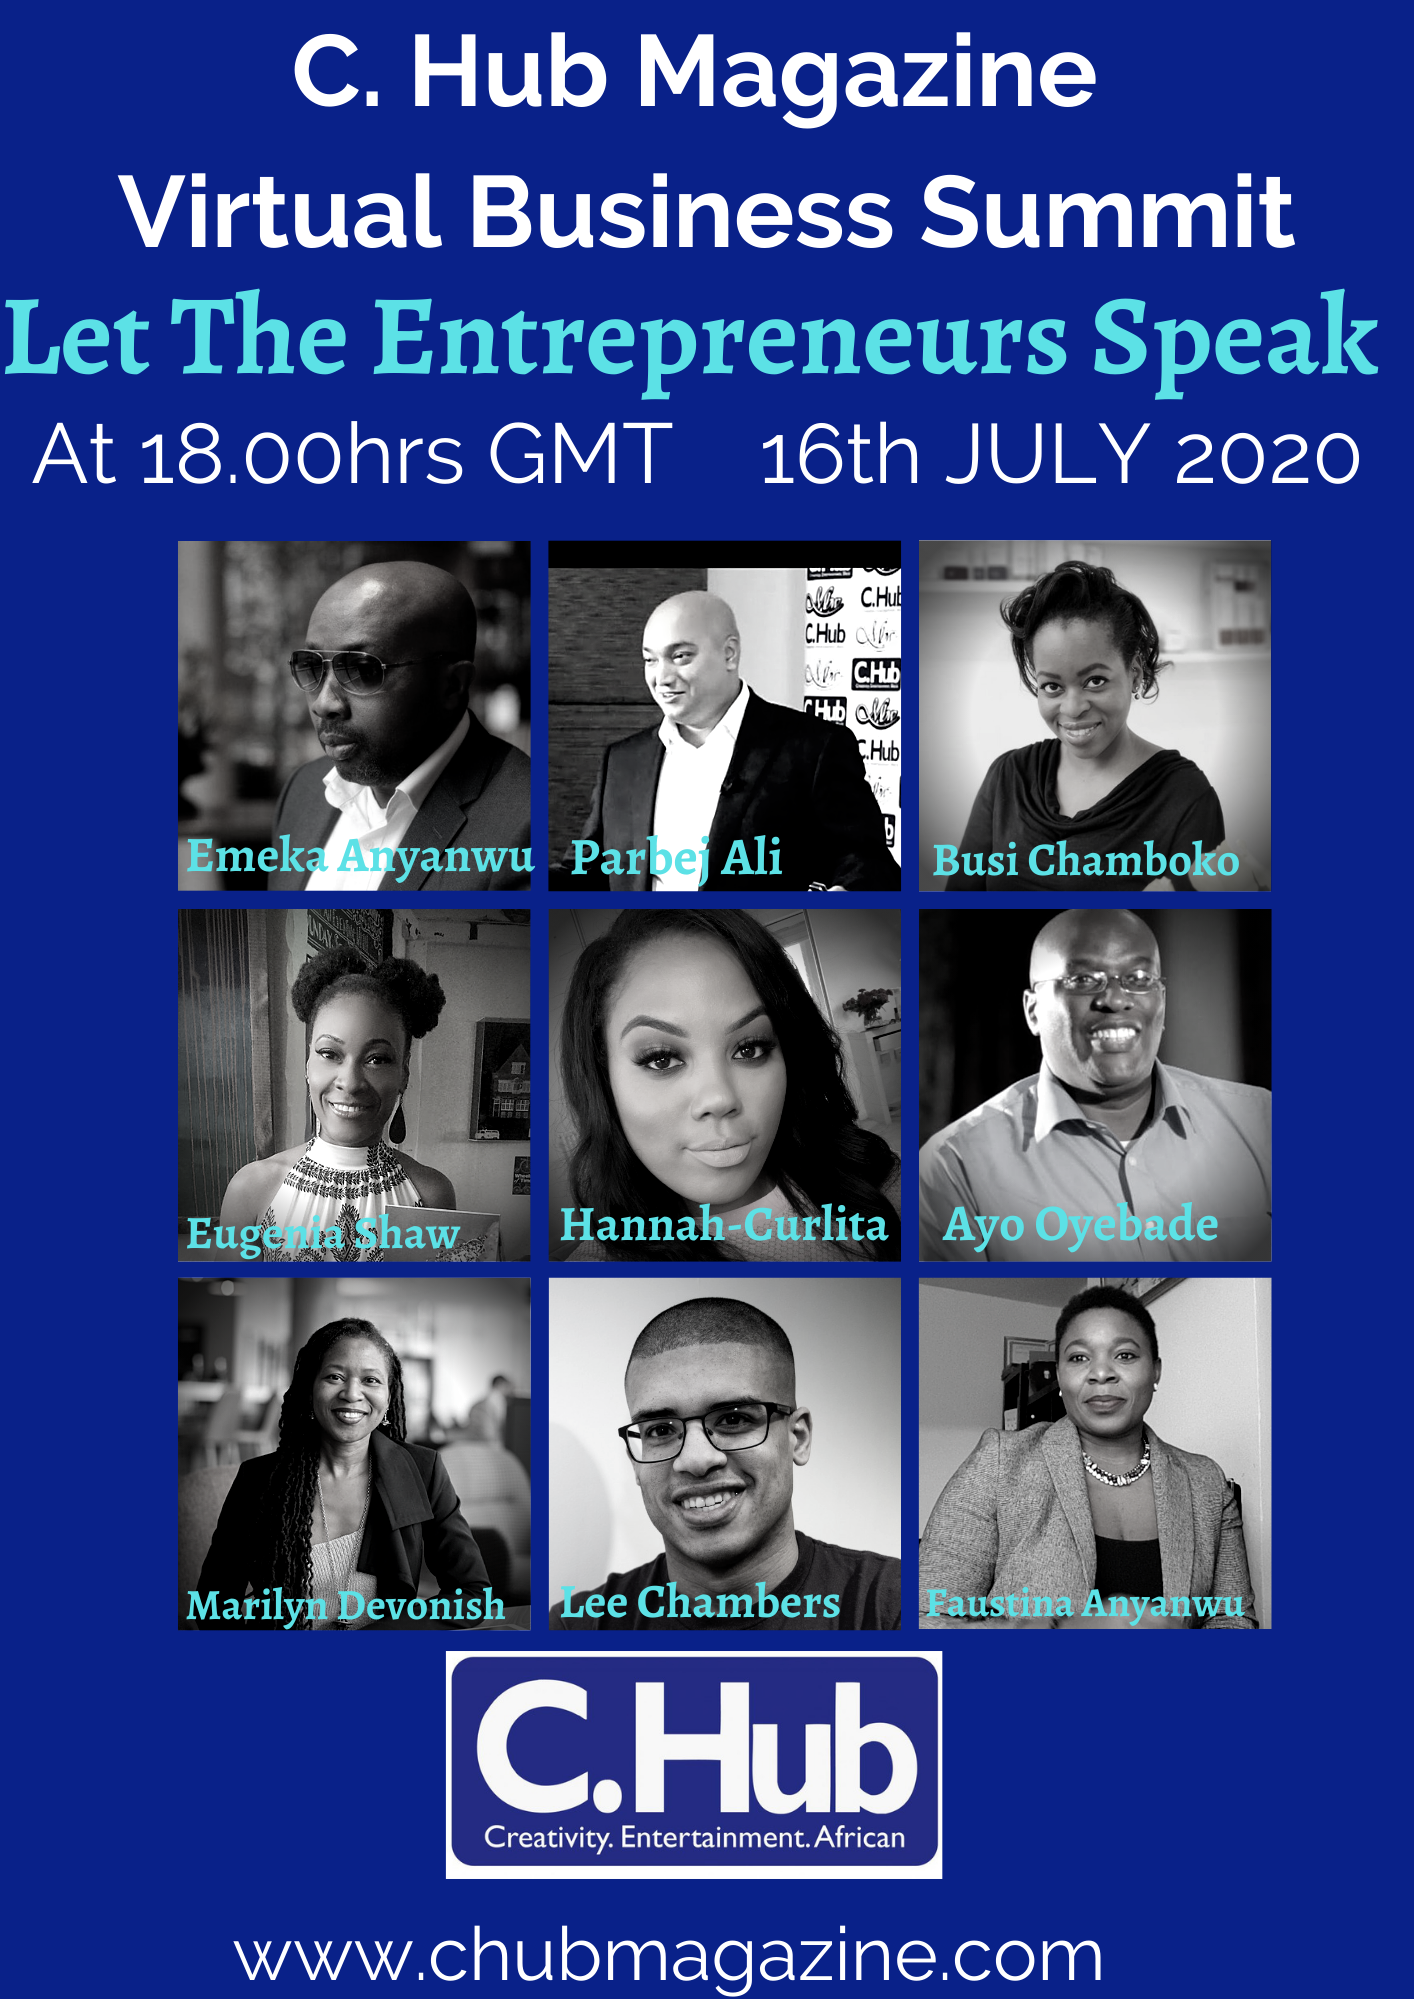 Business Summit Let the Entrepreneurs Speak. C.Hub Magazine